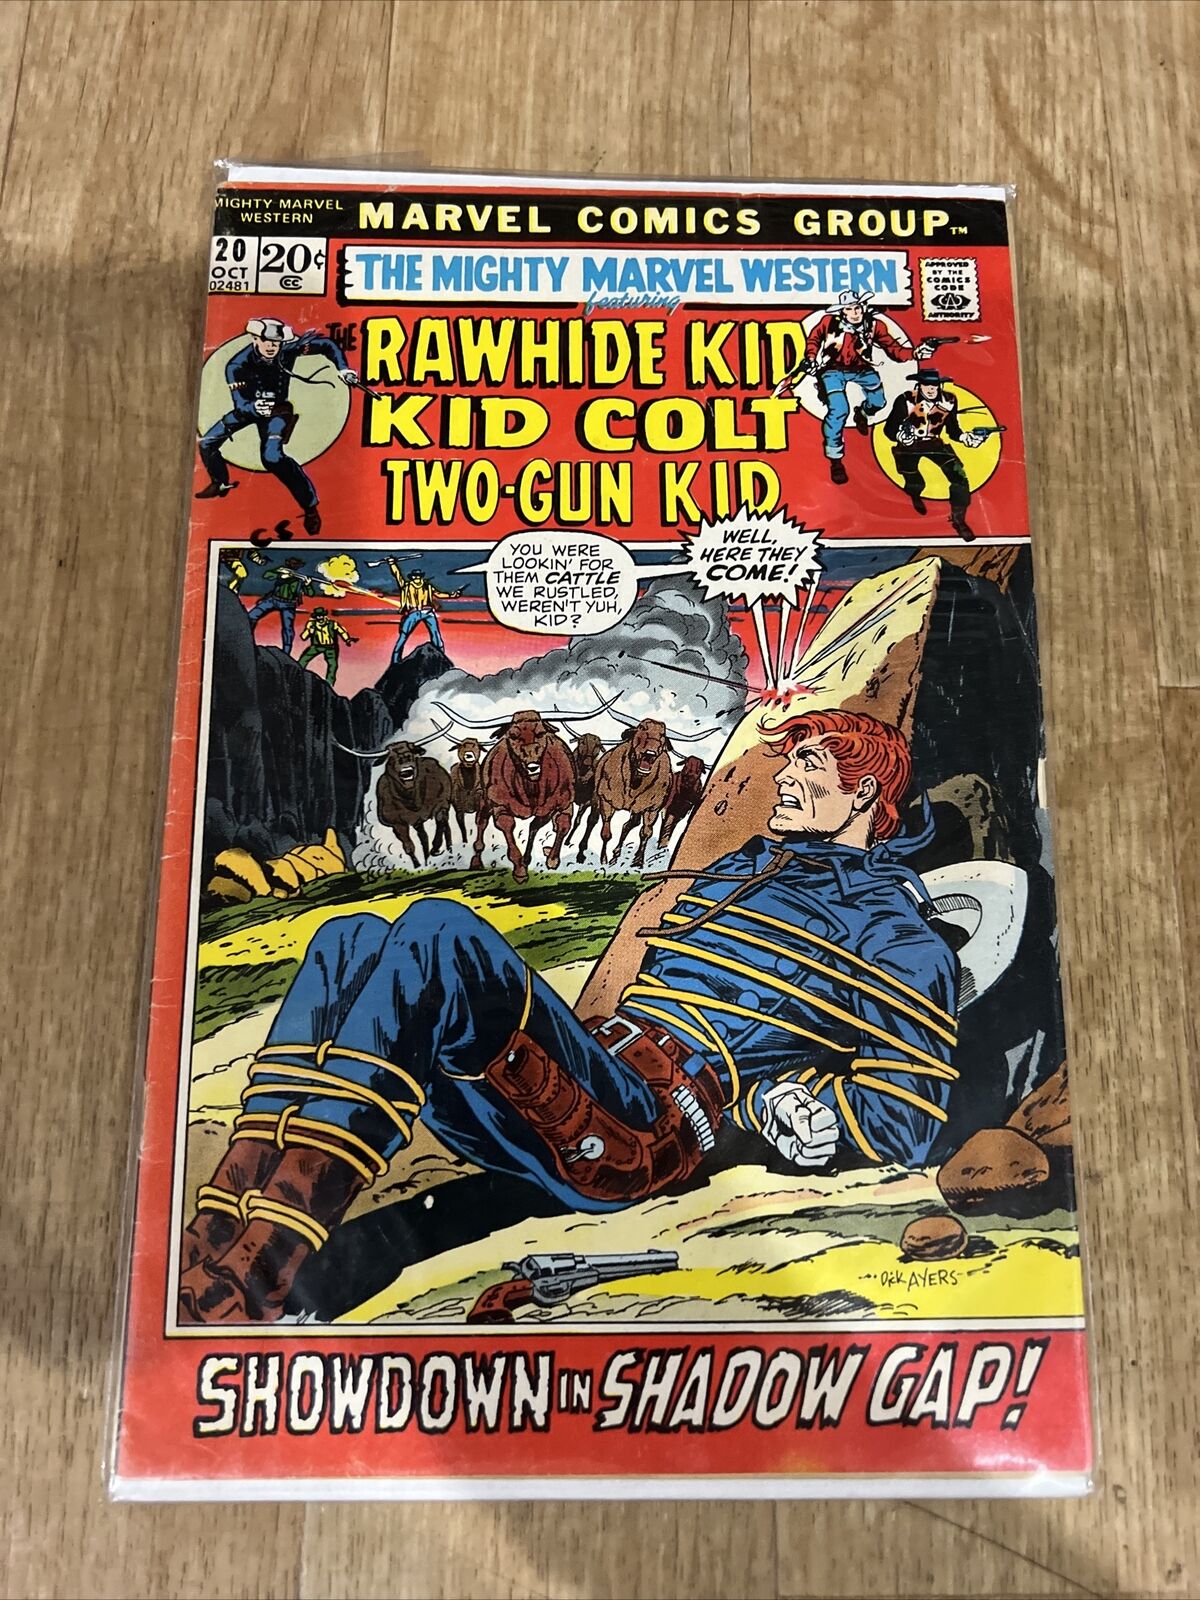 The Mighty Marvel Western #20 (1972) Featuring Rawhide Kid, Kid Colt, 2-Gun Kid